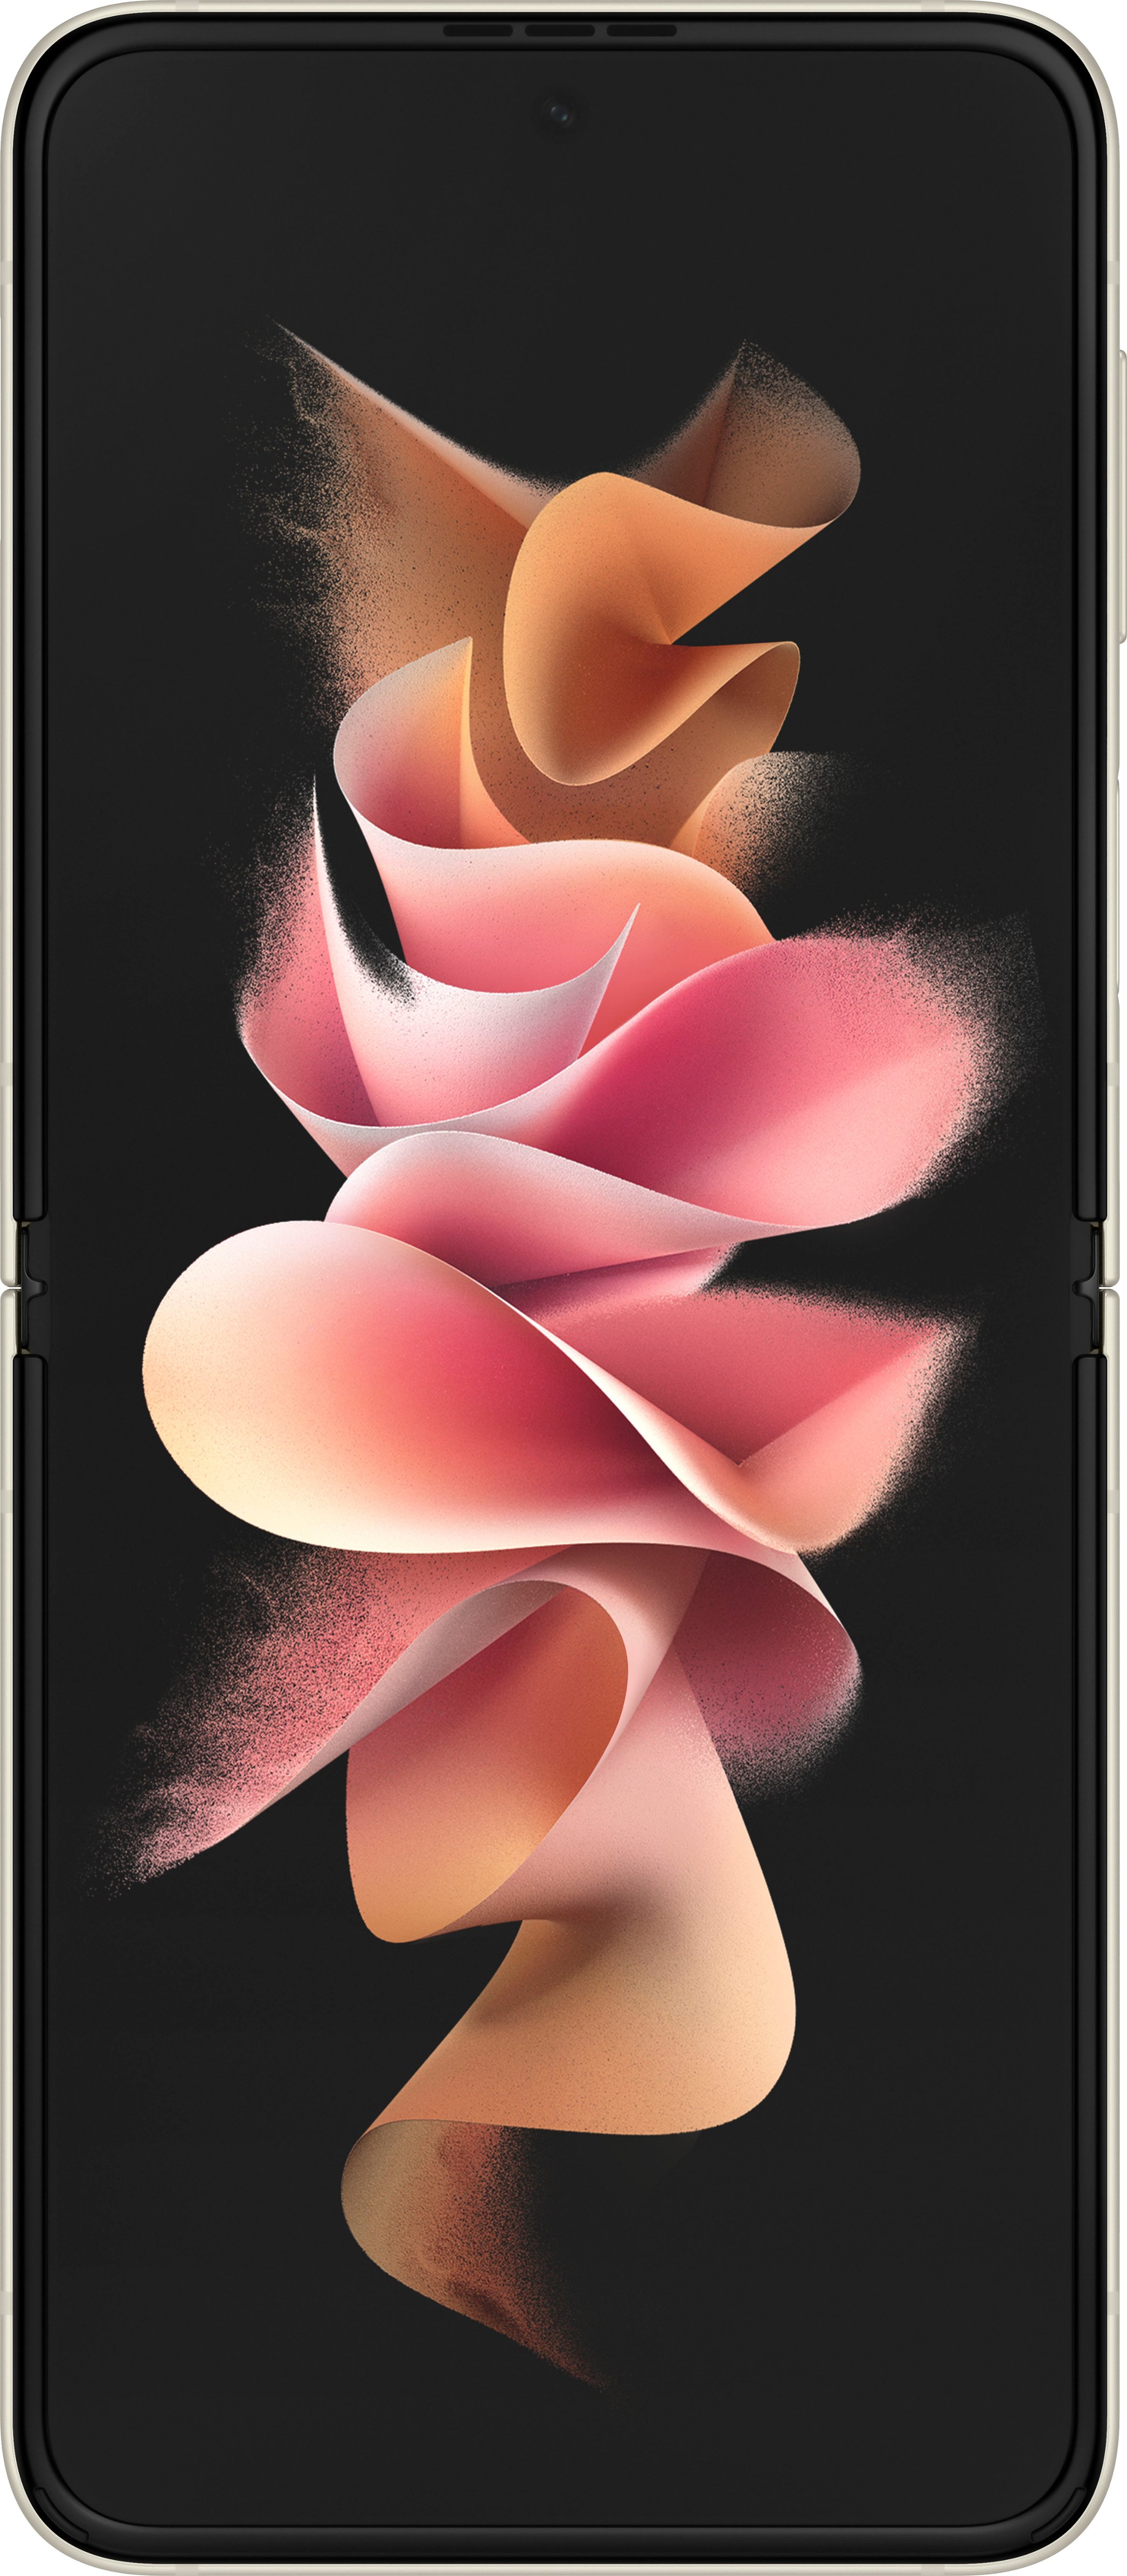 SM-F711UZWEXAA, Galaxy Z Flip3 5G 256GB (Unlocked) White